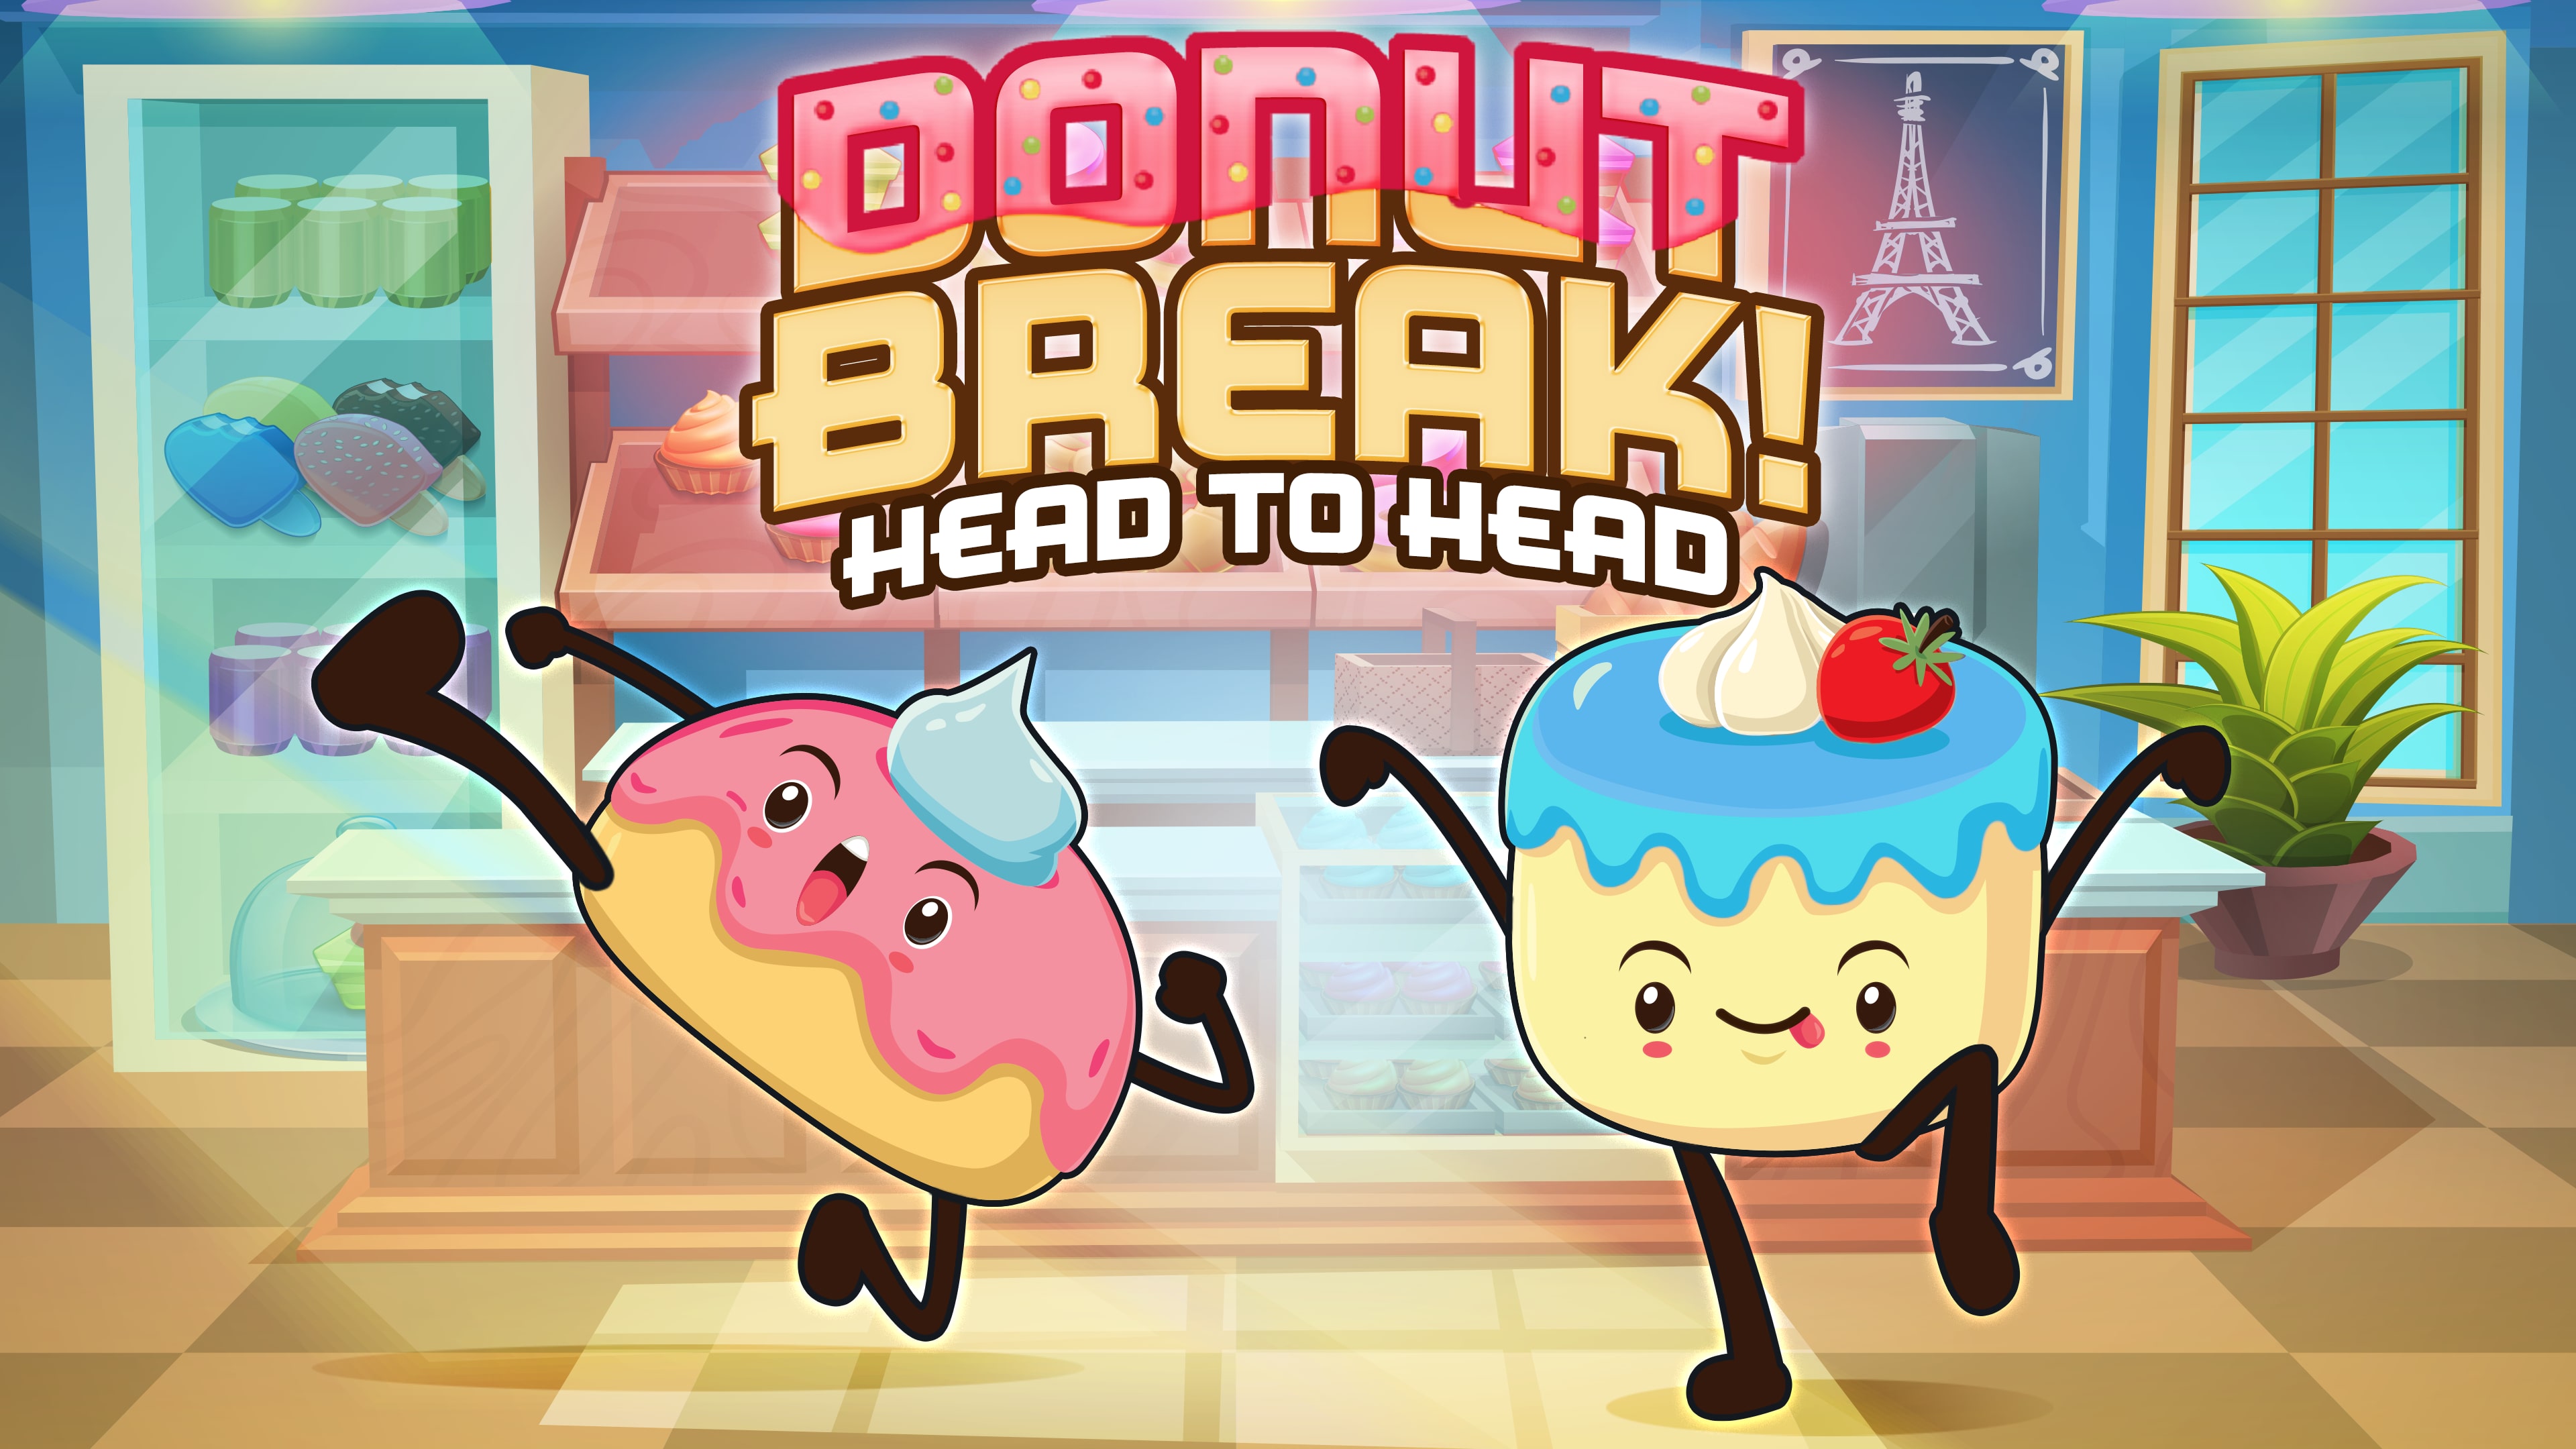 Avatar Full Game Bundle Donut Break Head to Head